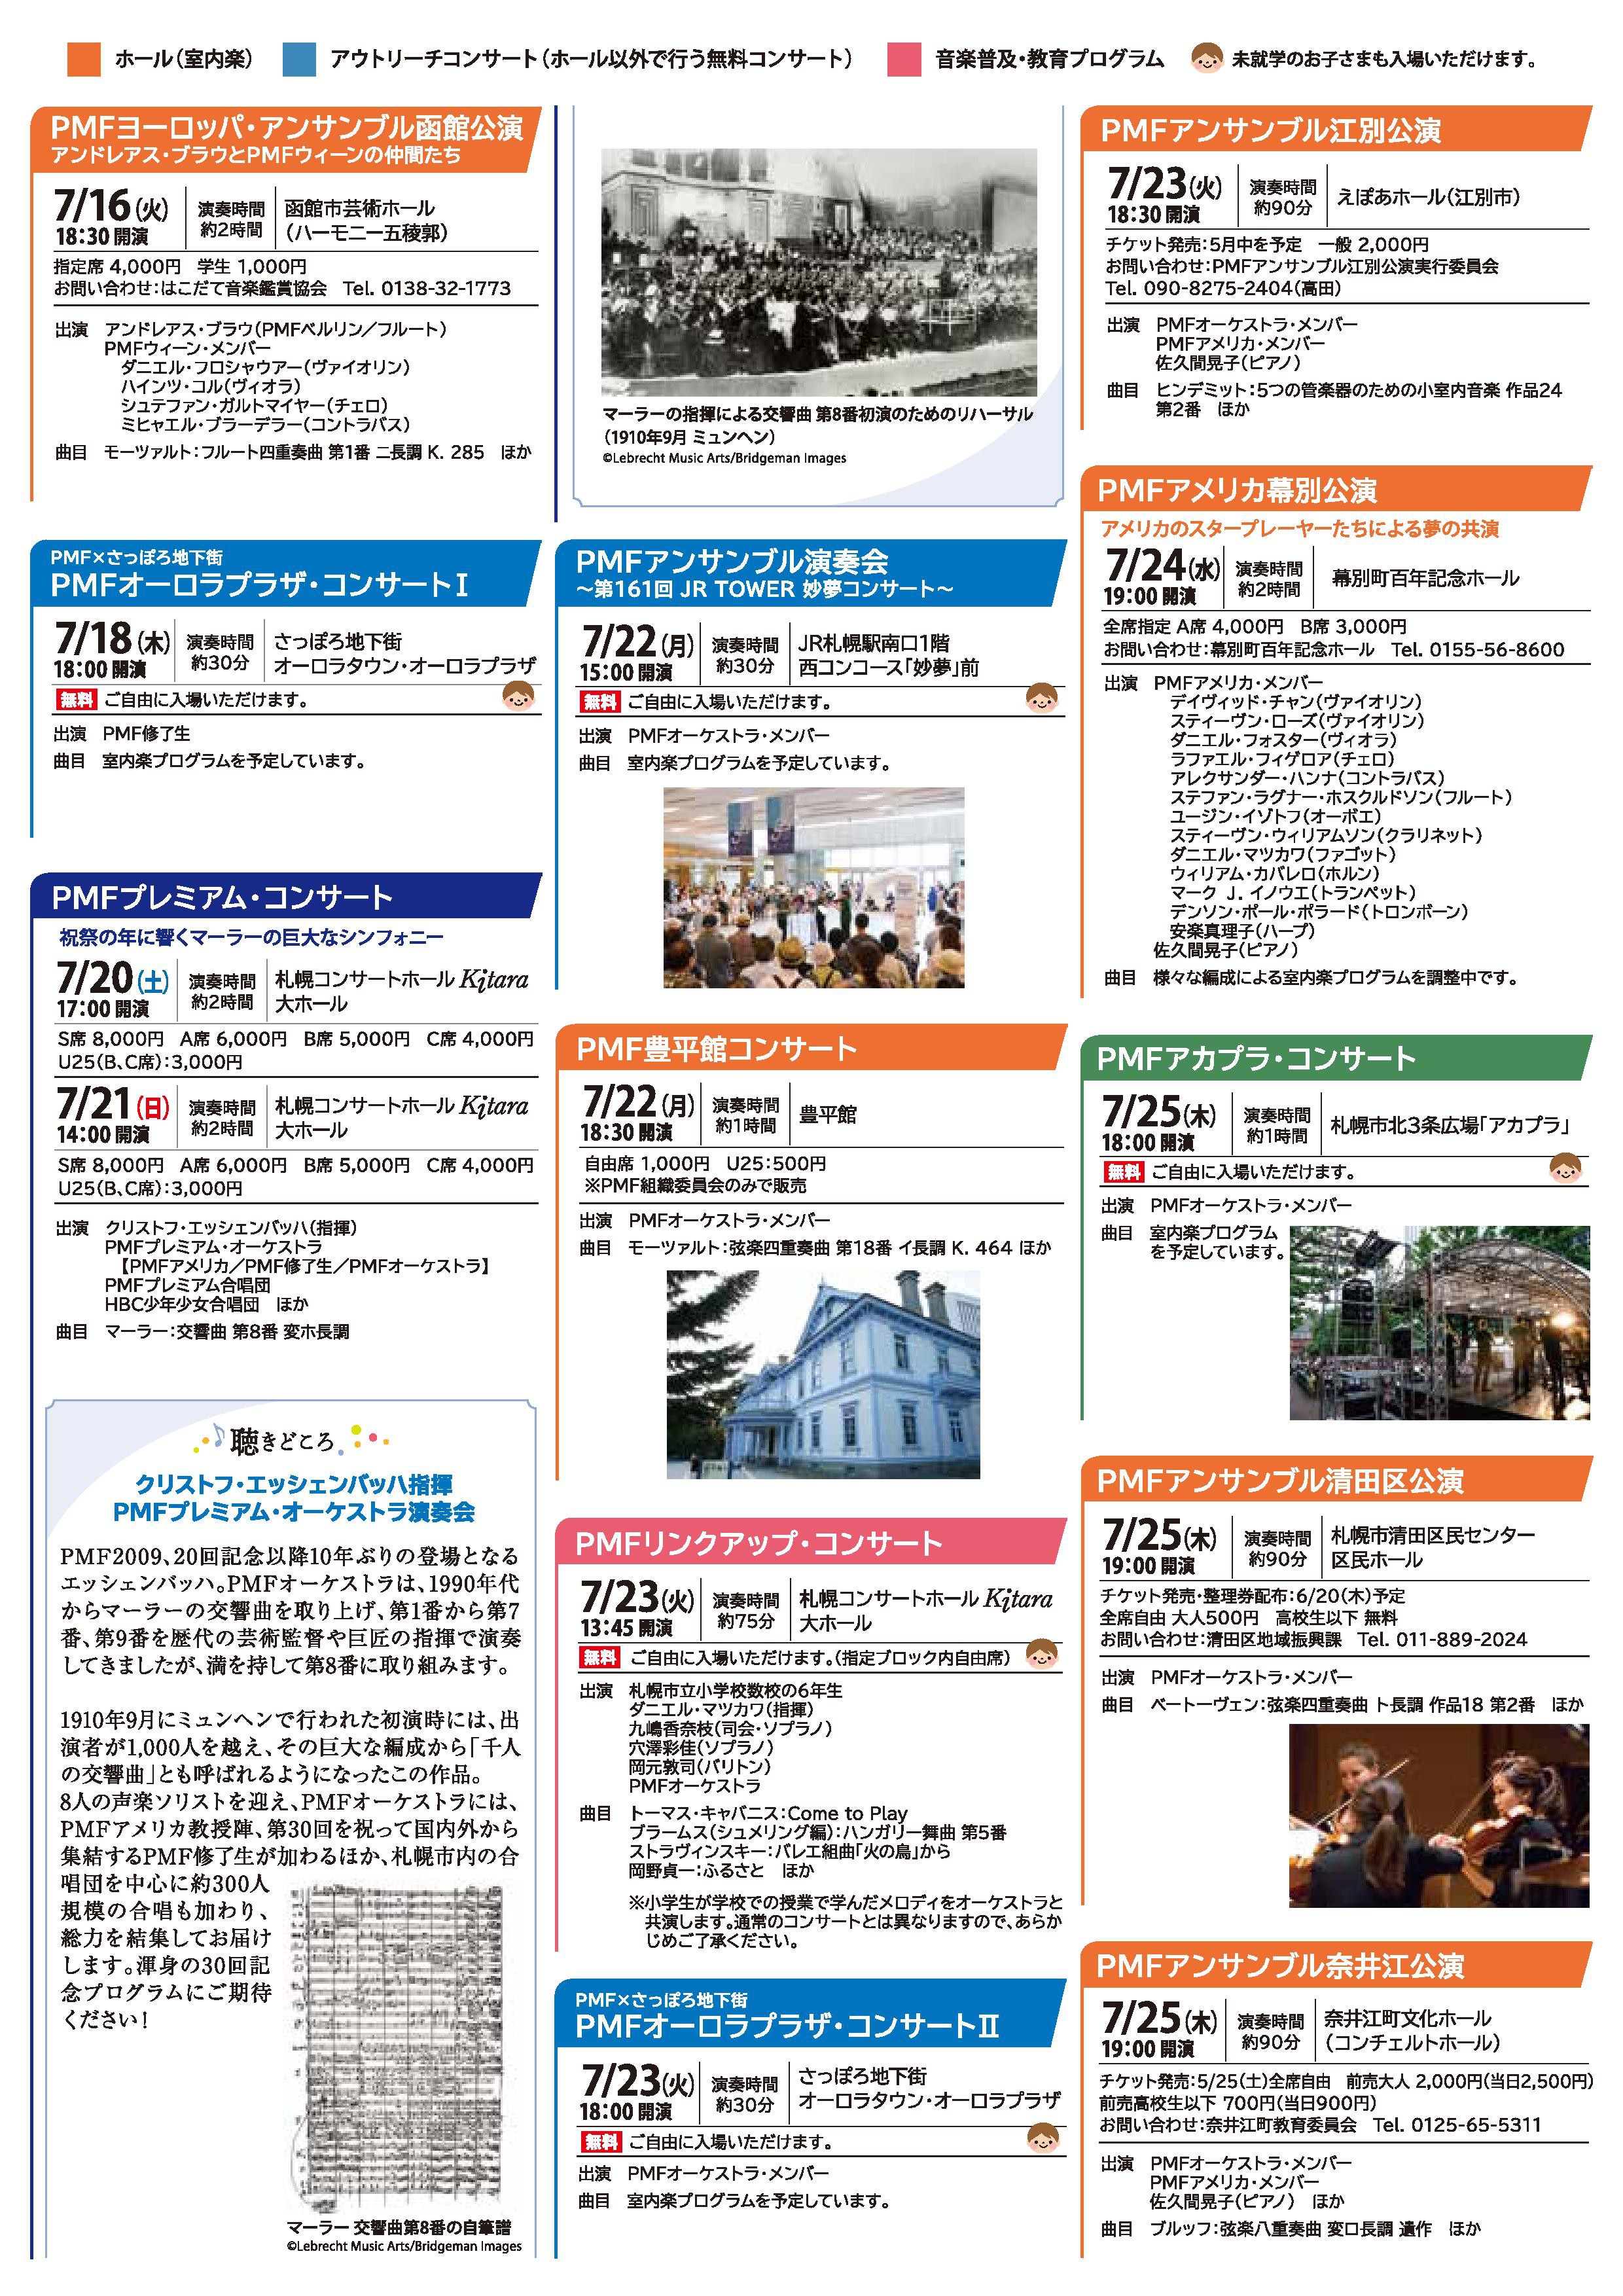 PMF 2019 Concert Schedule *Japanese (2)